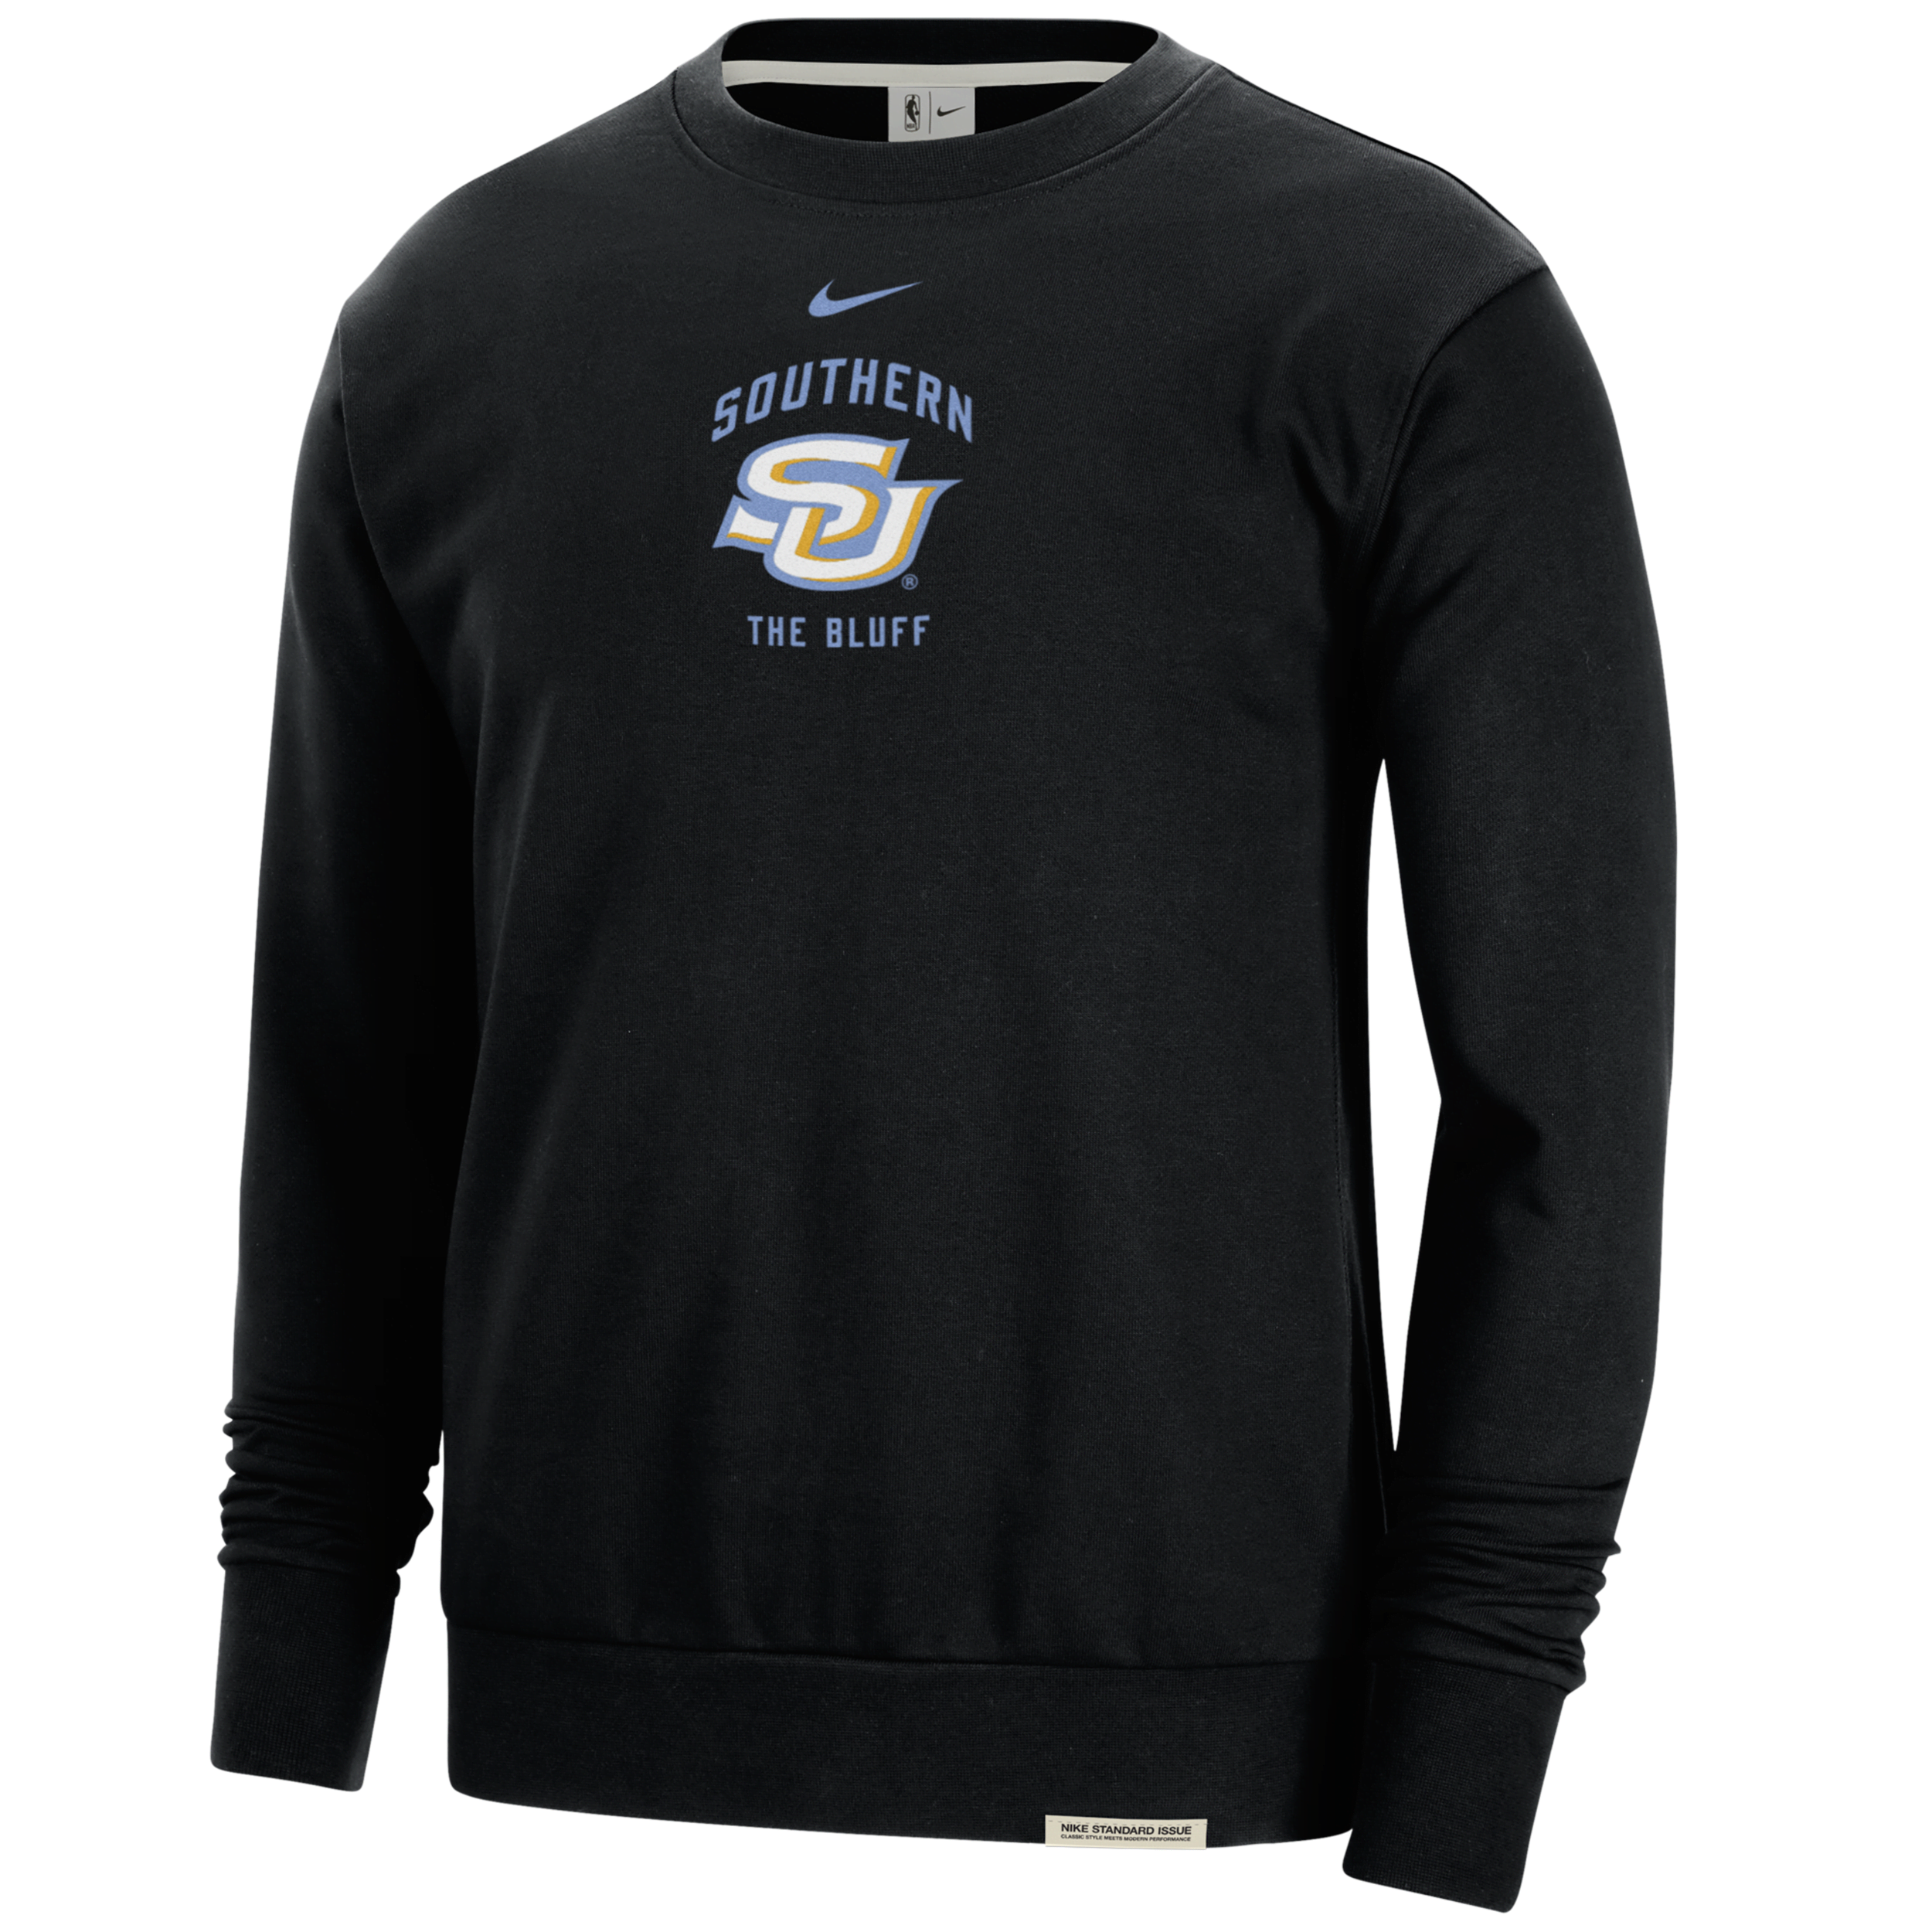 Nike Southern Standard Issue  Men's College Fleece Crew-neck Sweatshirt In Black